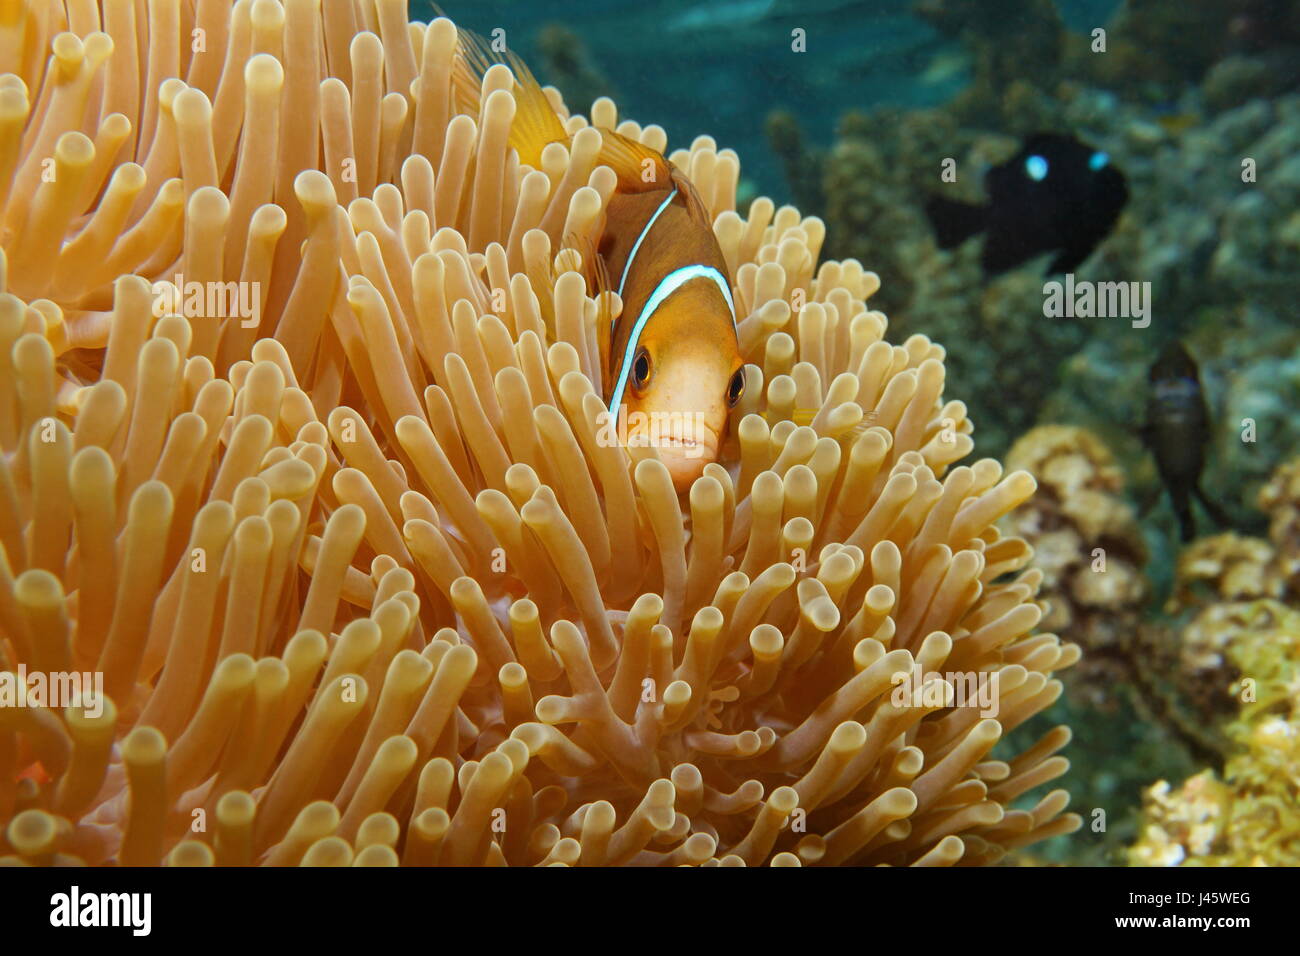 Tropical fish clownfish Amphiprion chrysopterus, orange-fin anemonefish, hidden in sea anemone tentacles, Pacific ocean, Bora Bora, French Polynesia Stock Photo